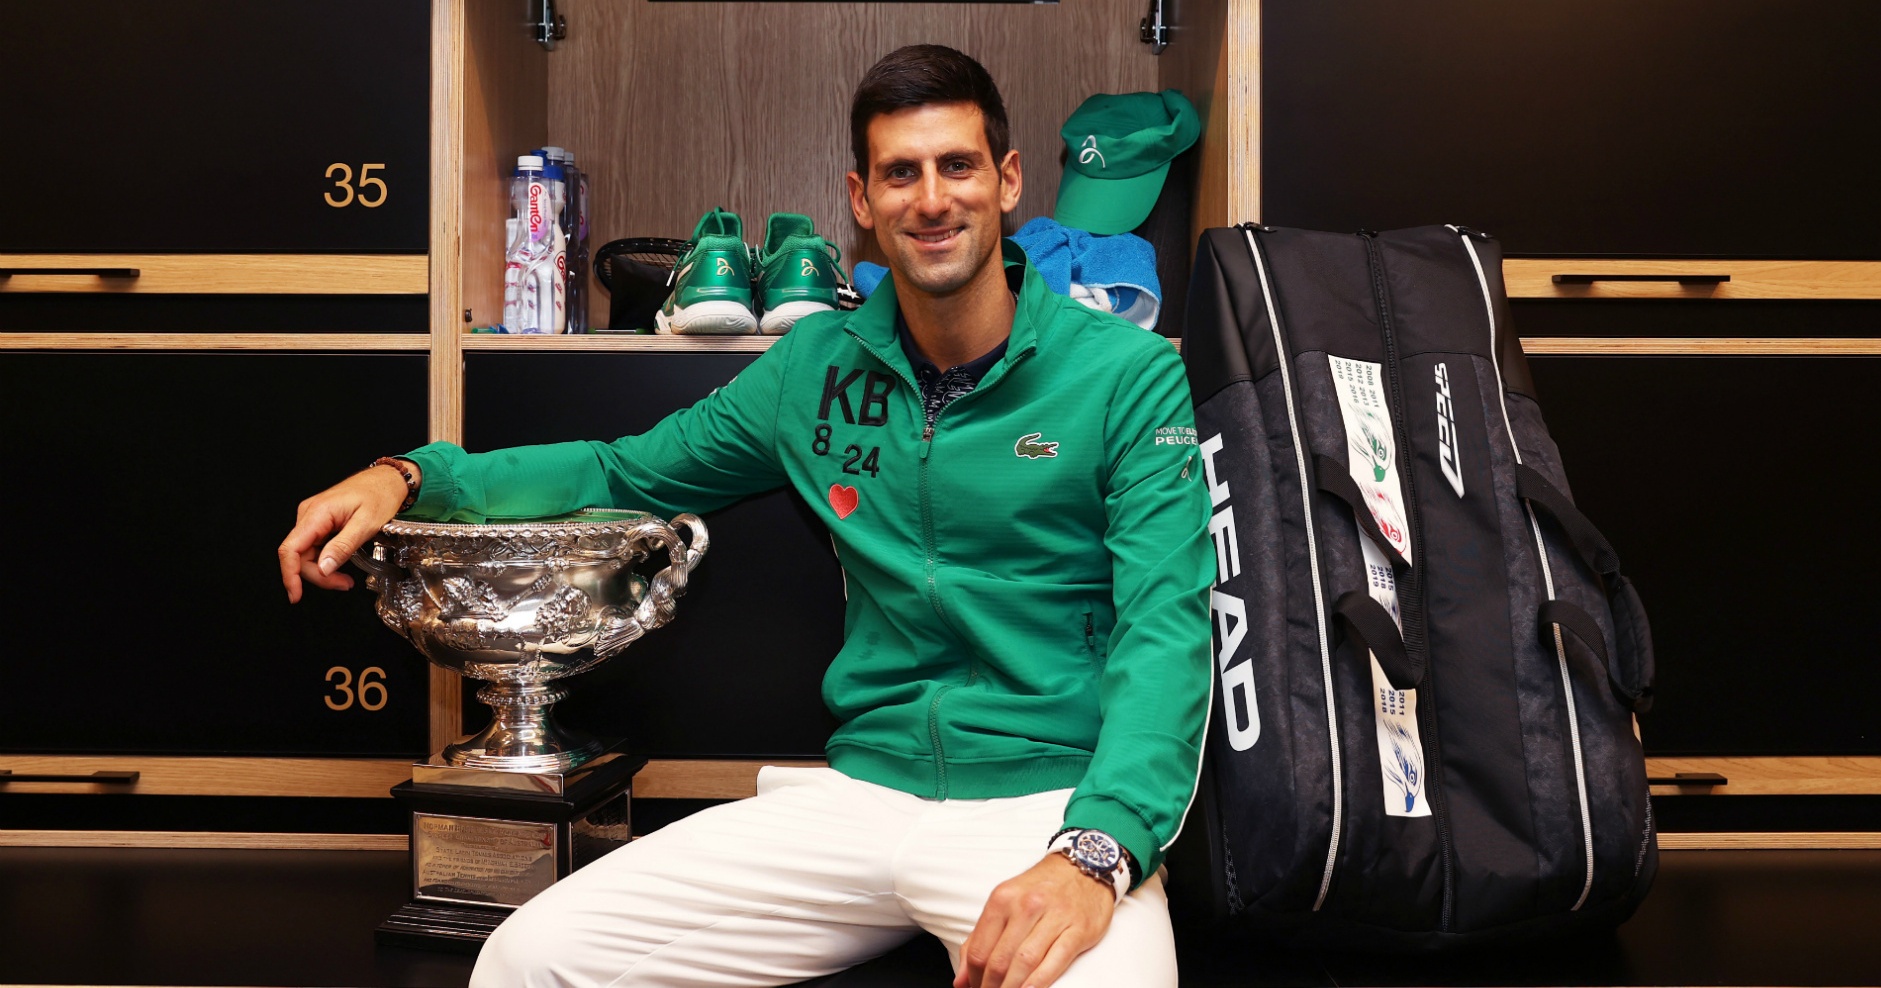 Novak Djokovic 2020 Australian Open